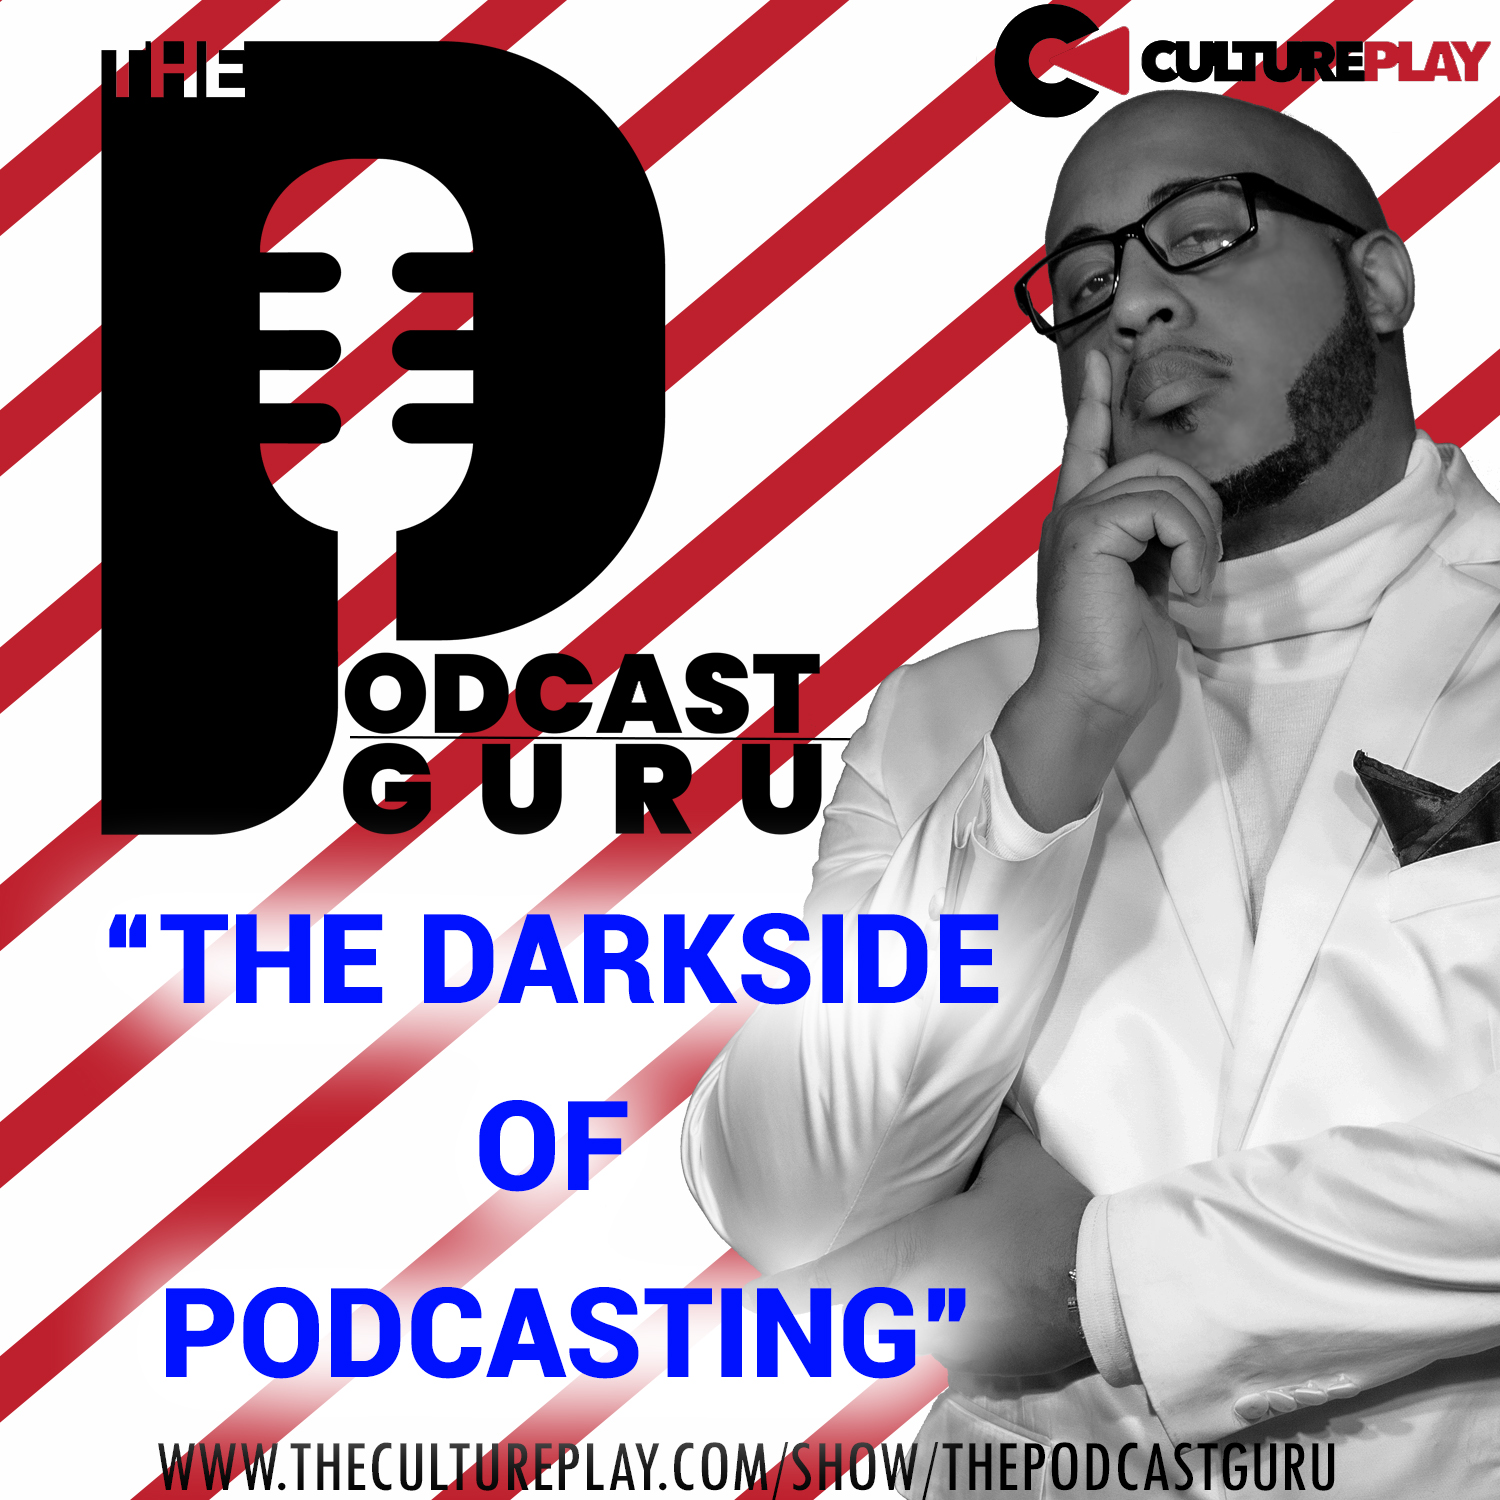 Podcast Guru - The Dark Side Of Podcasting